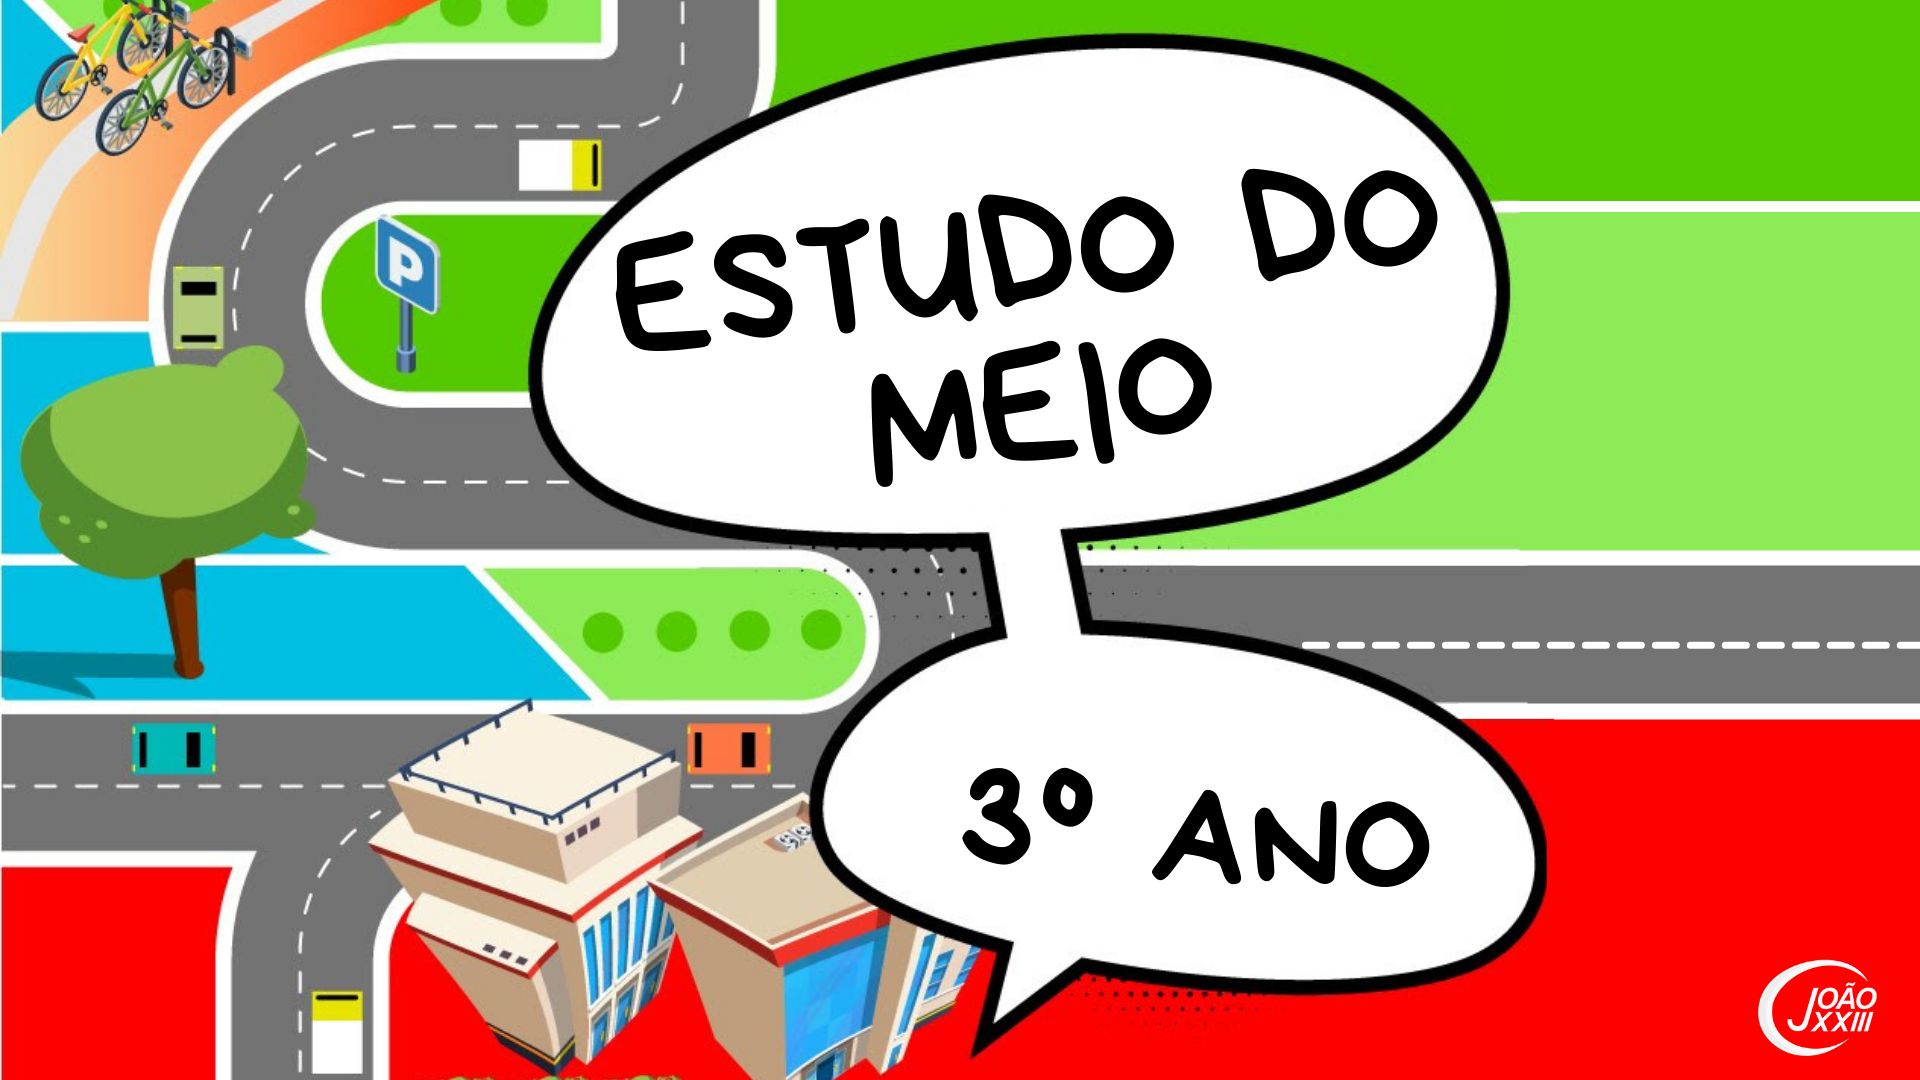 You are currently viewing Estudo do meio